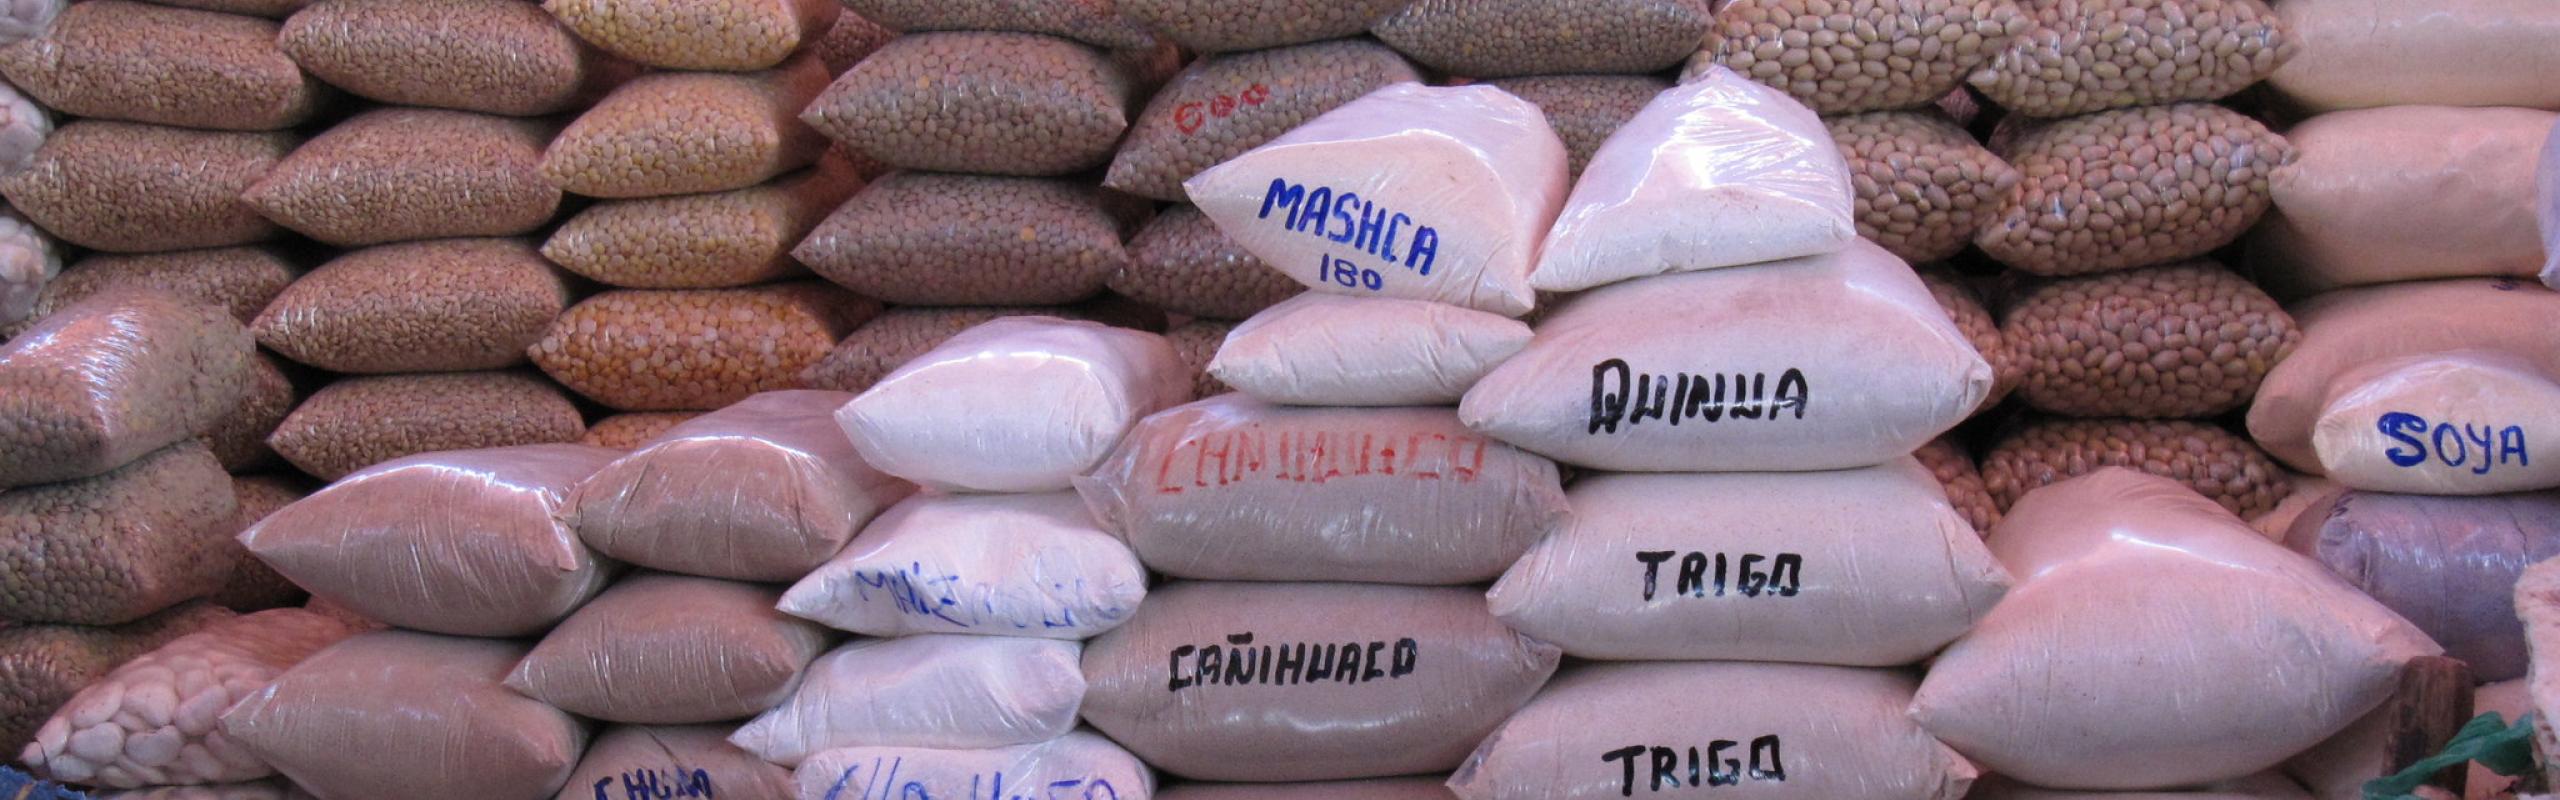 Bags of grain piled in a market in Peru